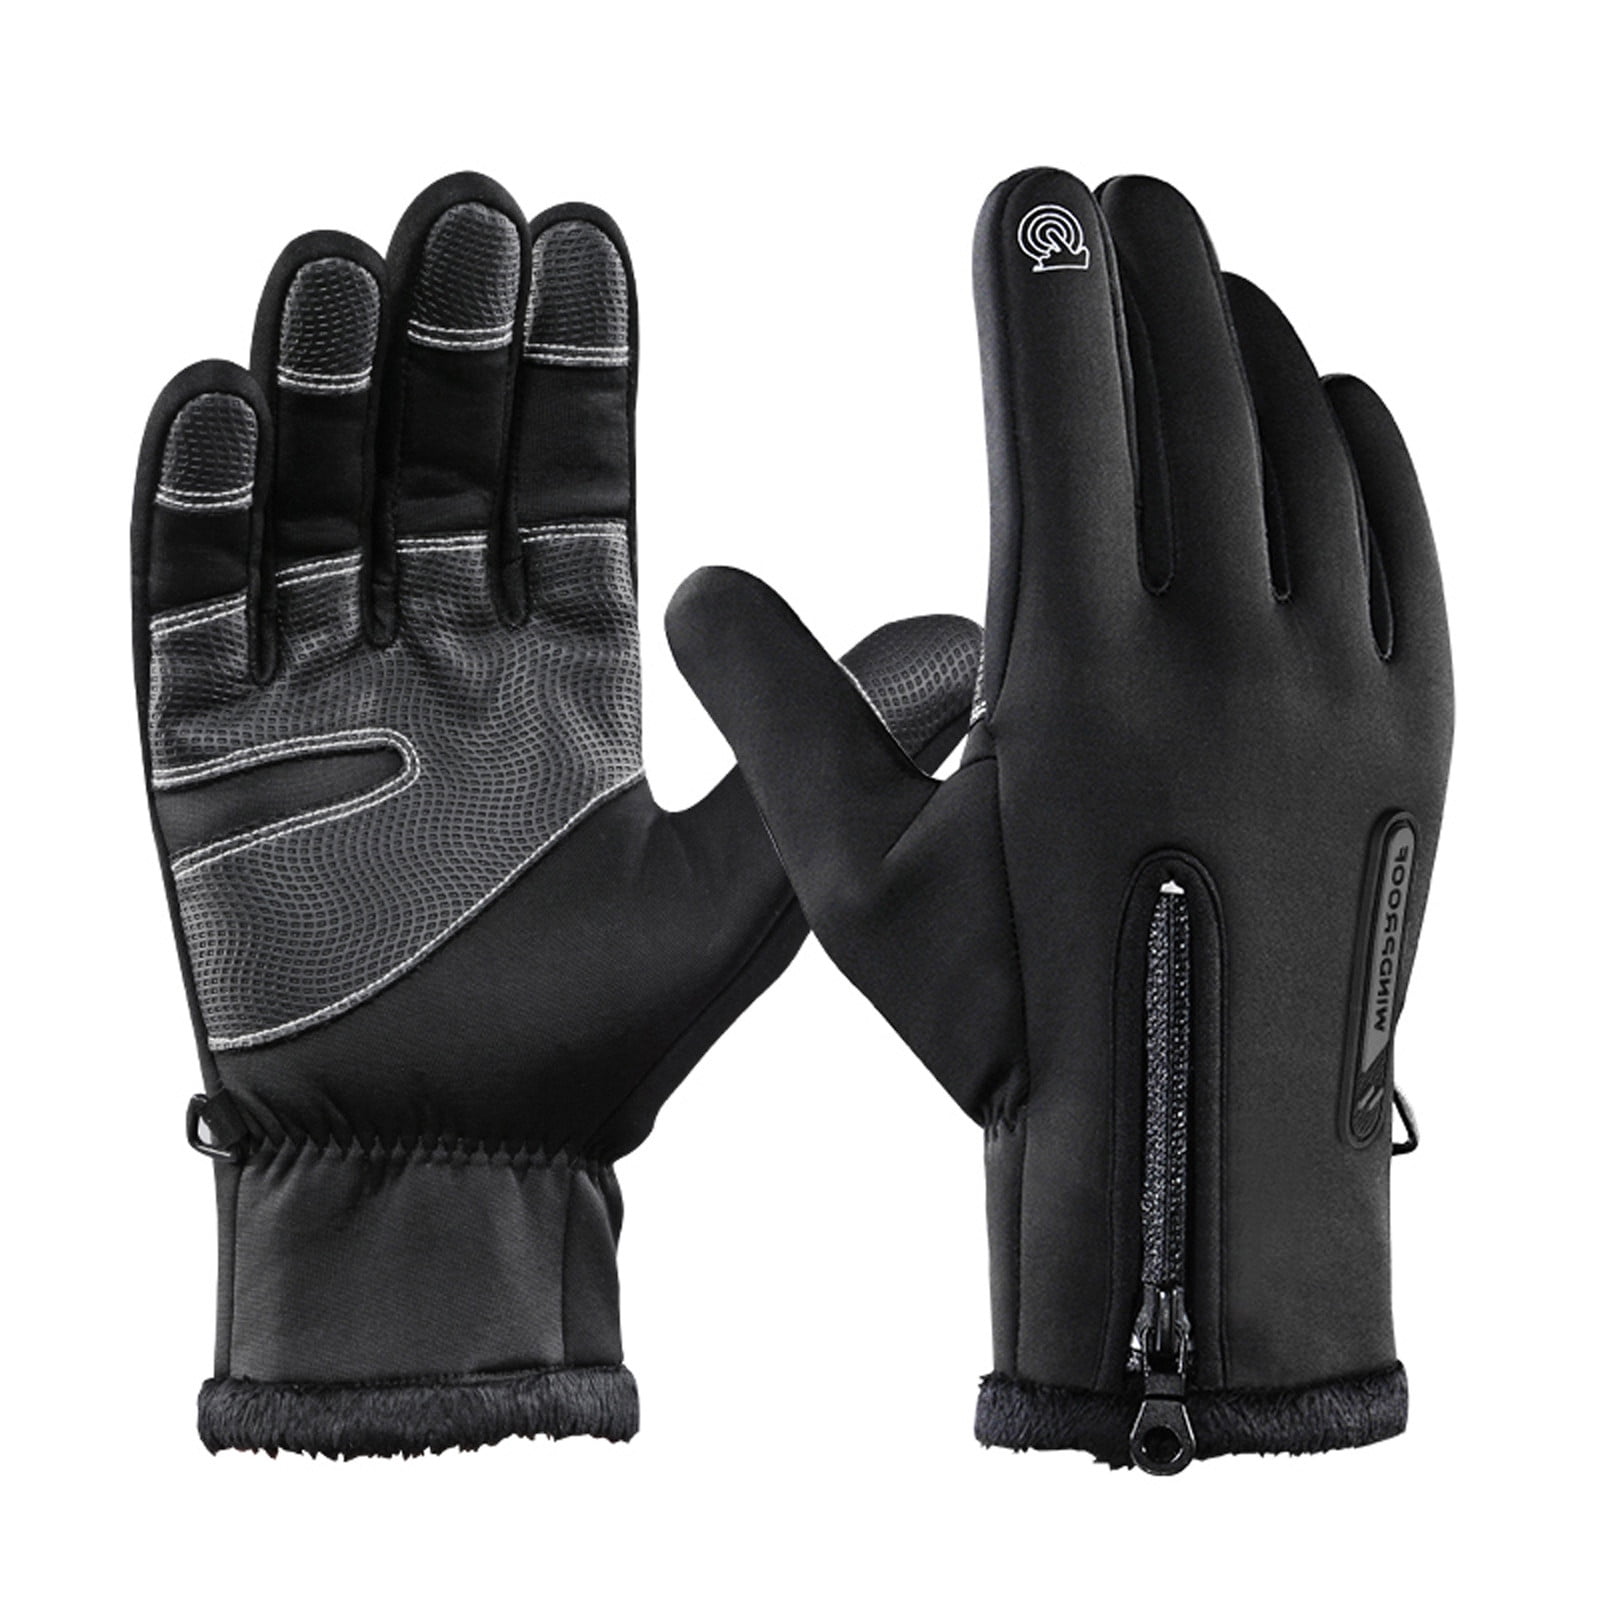 40℃ Waterproof Snow Ski Snowboarding Gloves Warm Thinsulate Thermal Men Black L 